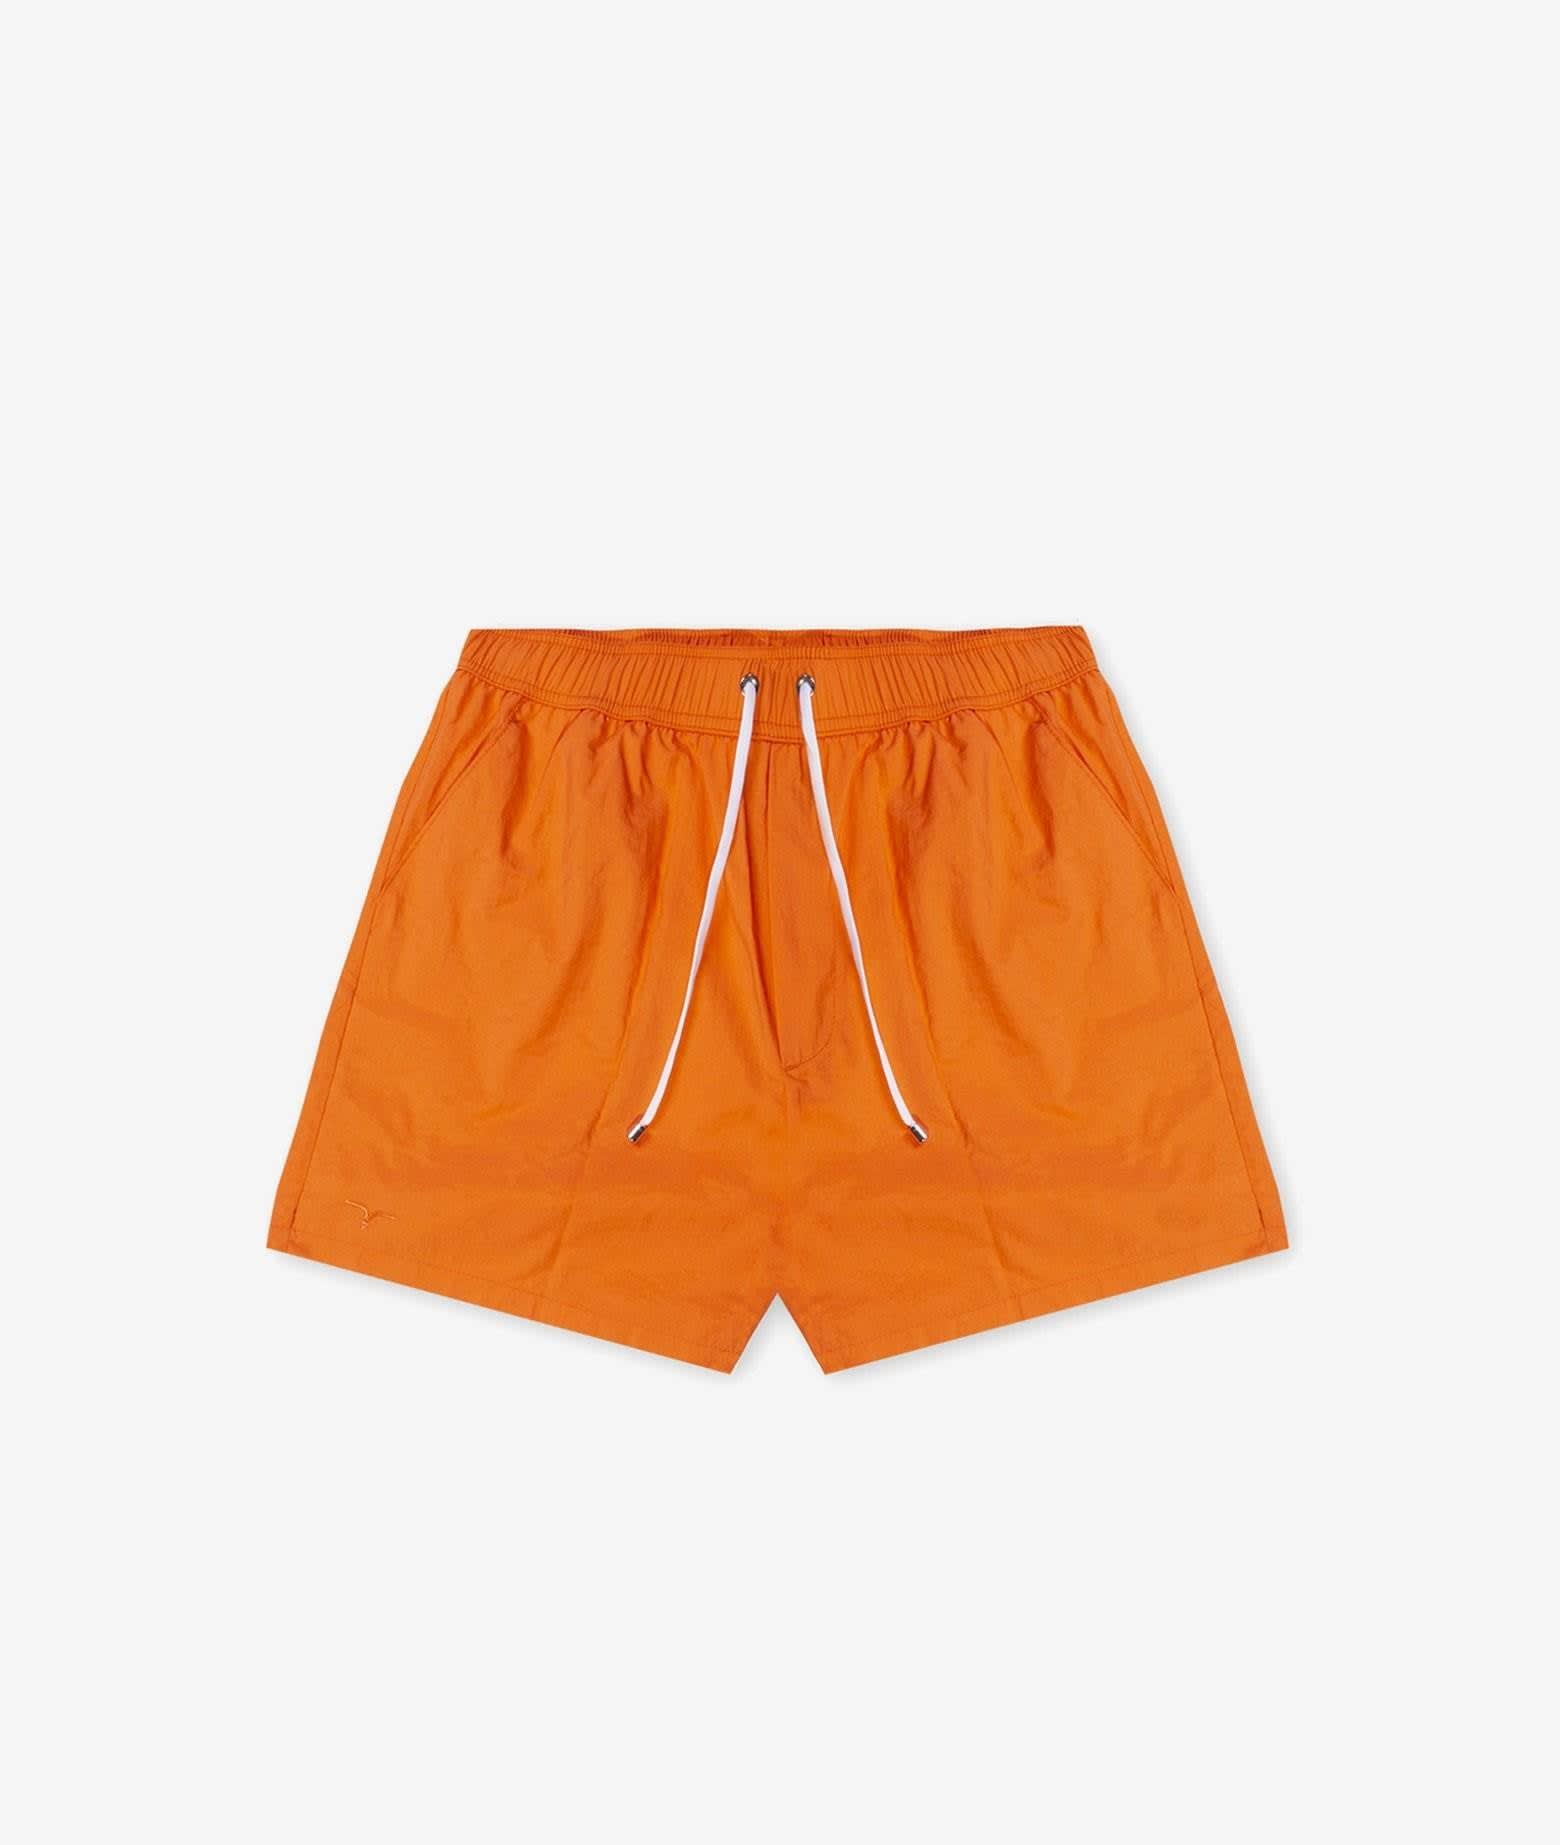 Larusmiani Swim Suit Cala Di Volpe Swimming Trunks In Orange